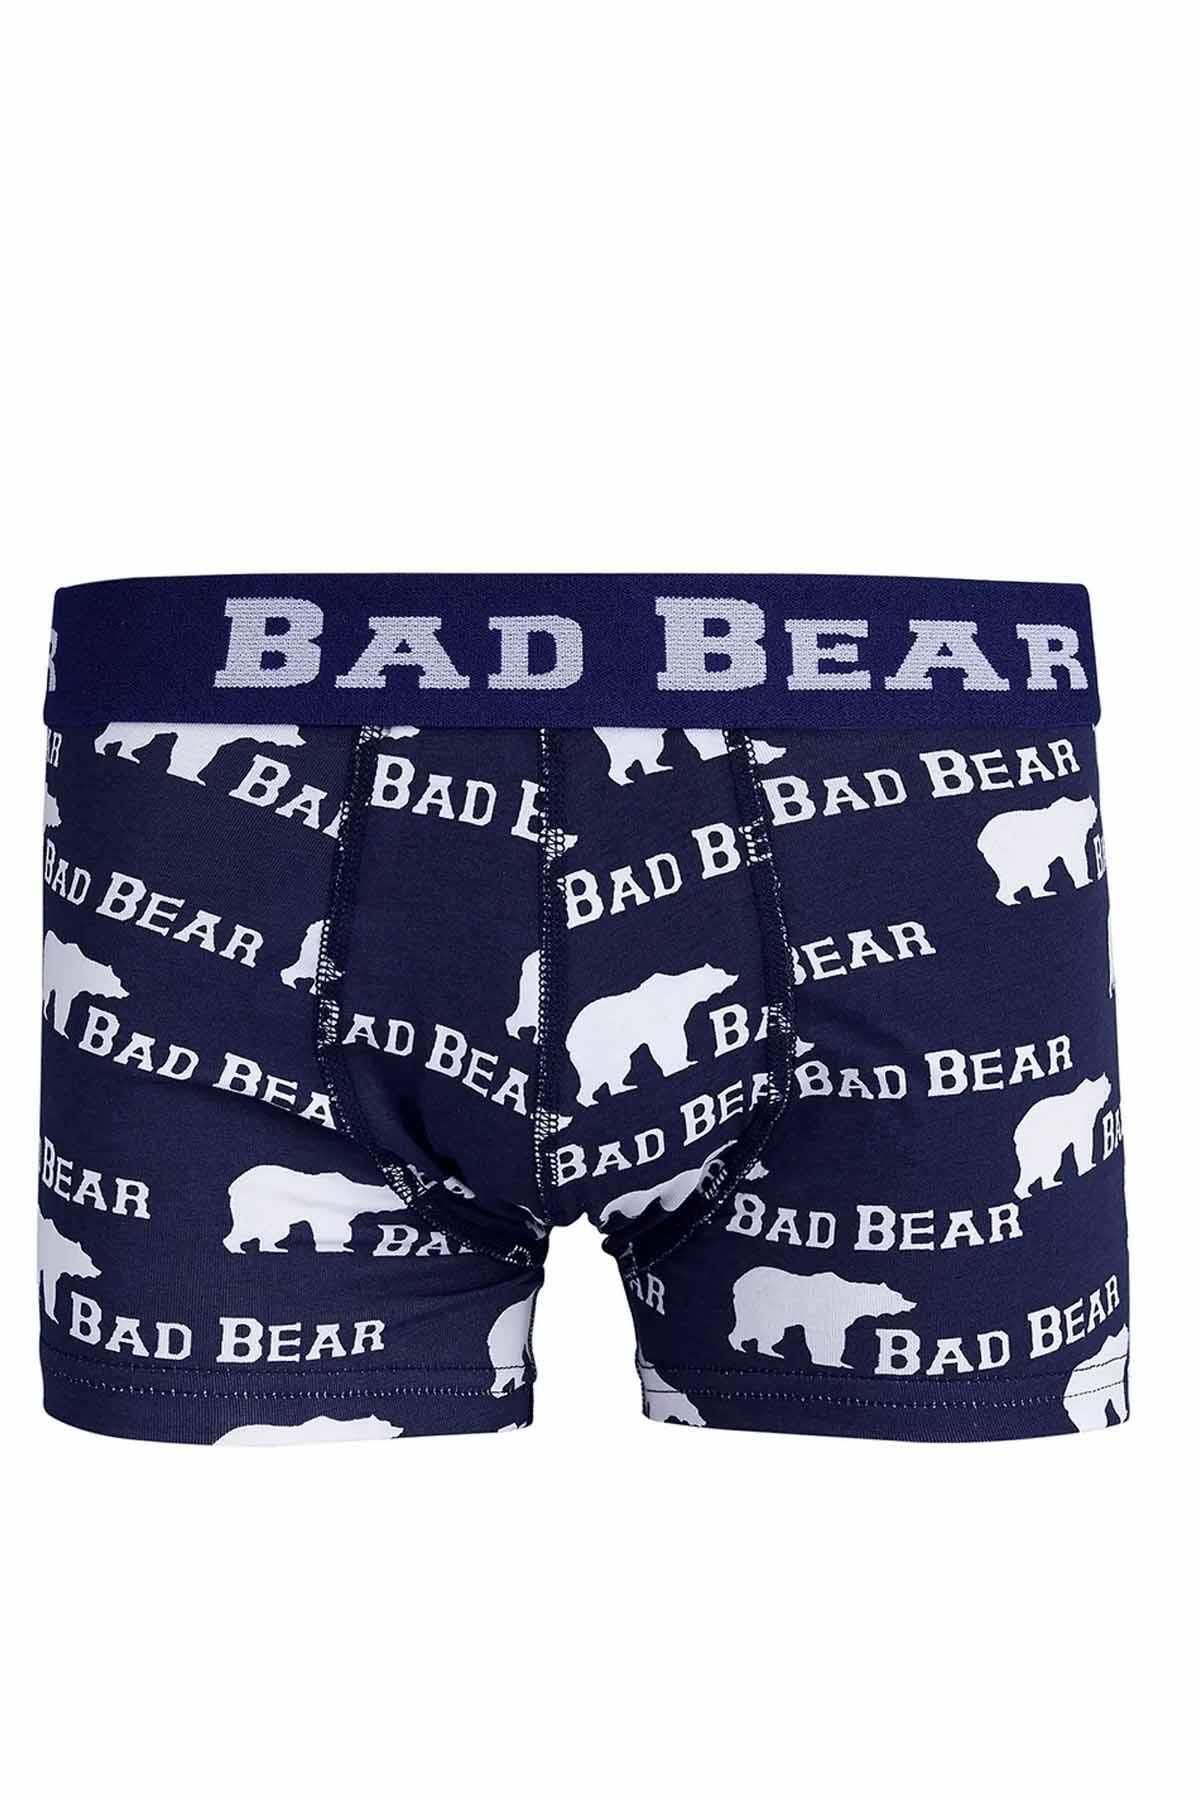 Bad Bear BEAR UW Erkek Boxer 18.01.03.004NAVY